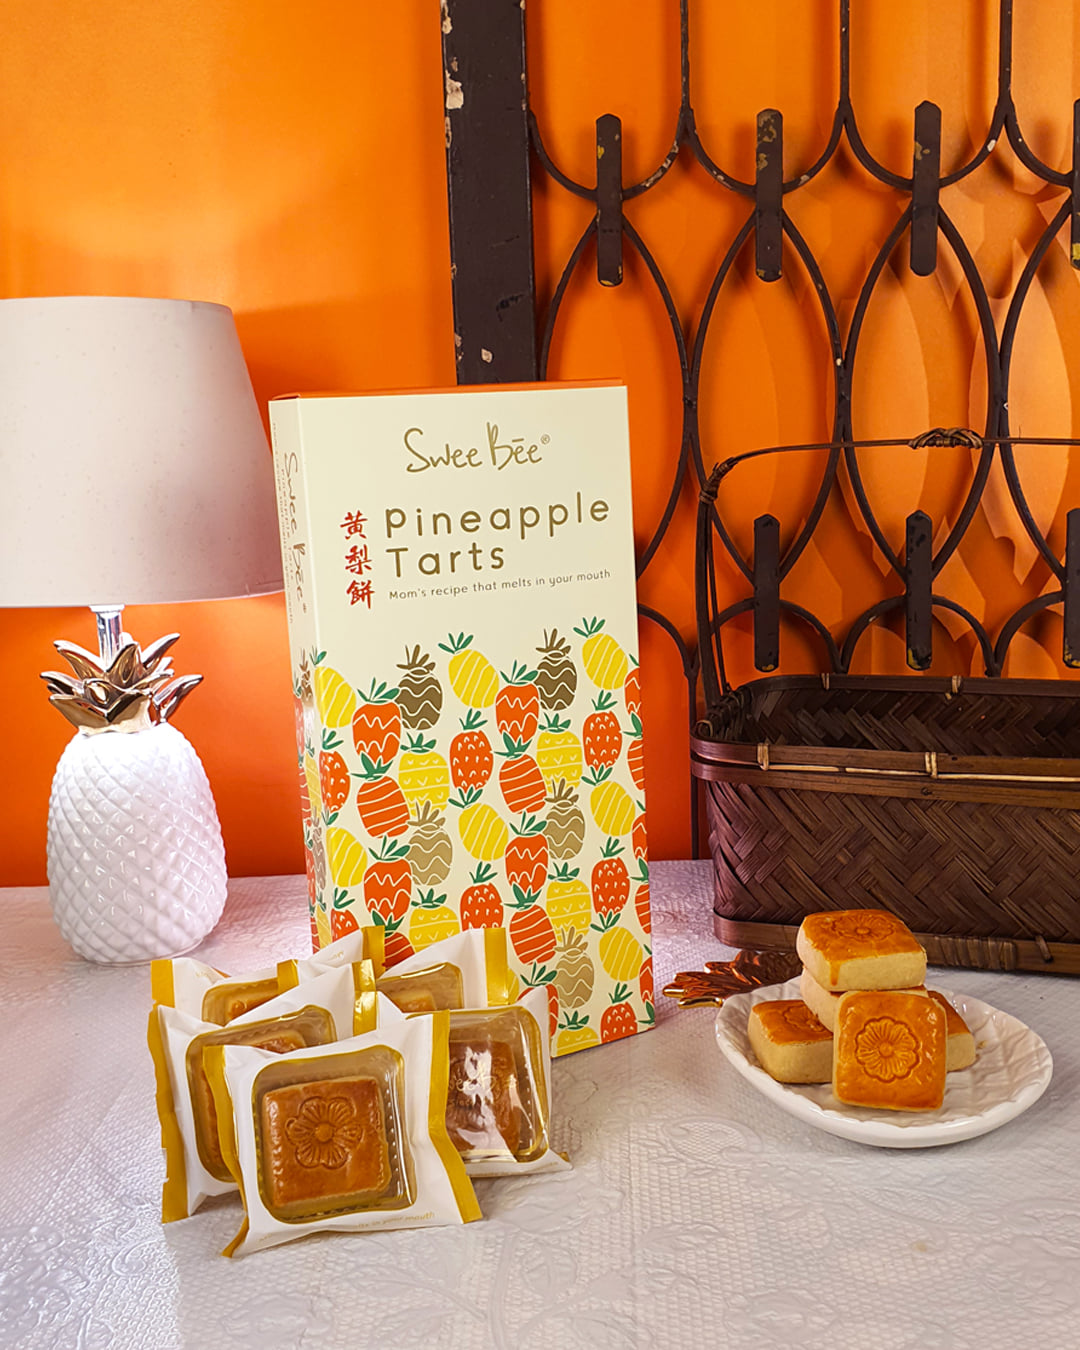 These are not just any pineapple tarts.         瑞美凤梨酥不是一般的风梨酥。